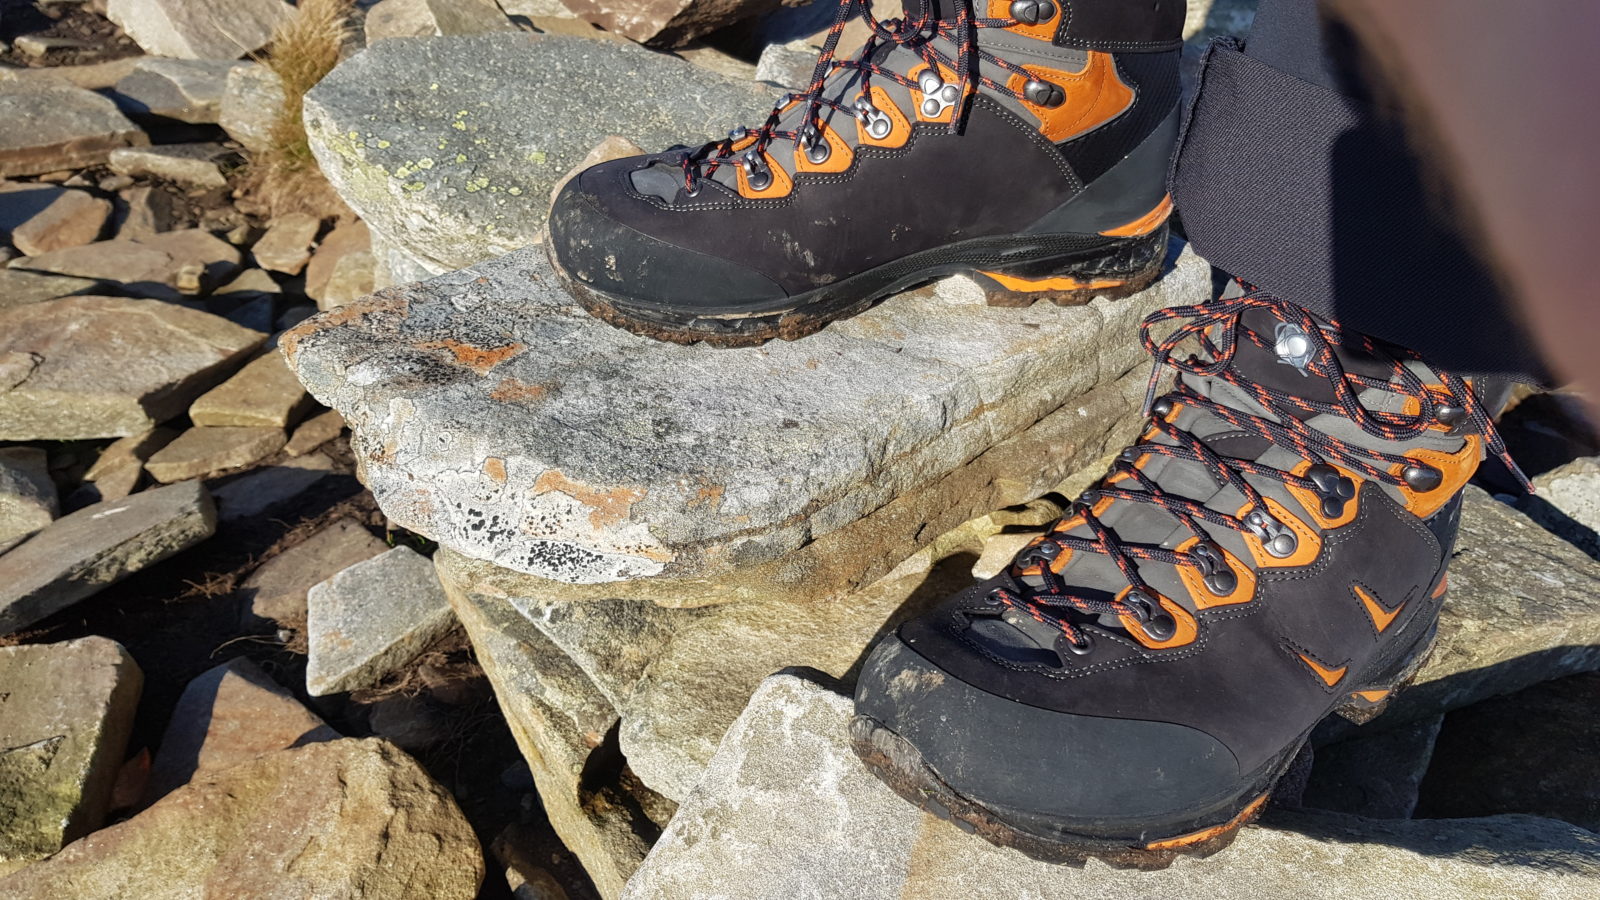 Lowa Camino GTX - Best Trekking Boots Ever Owned